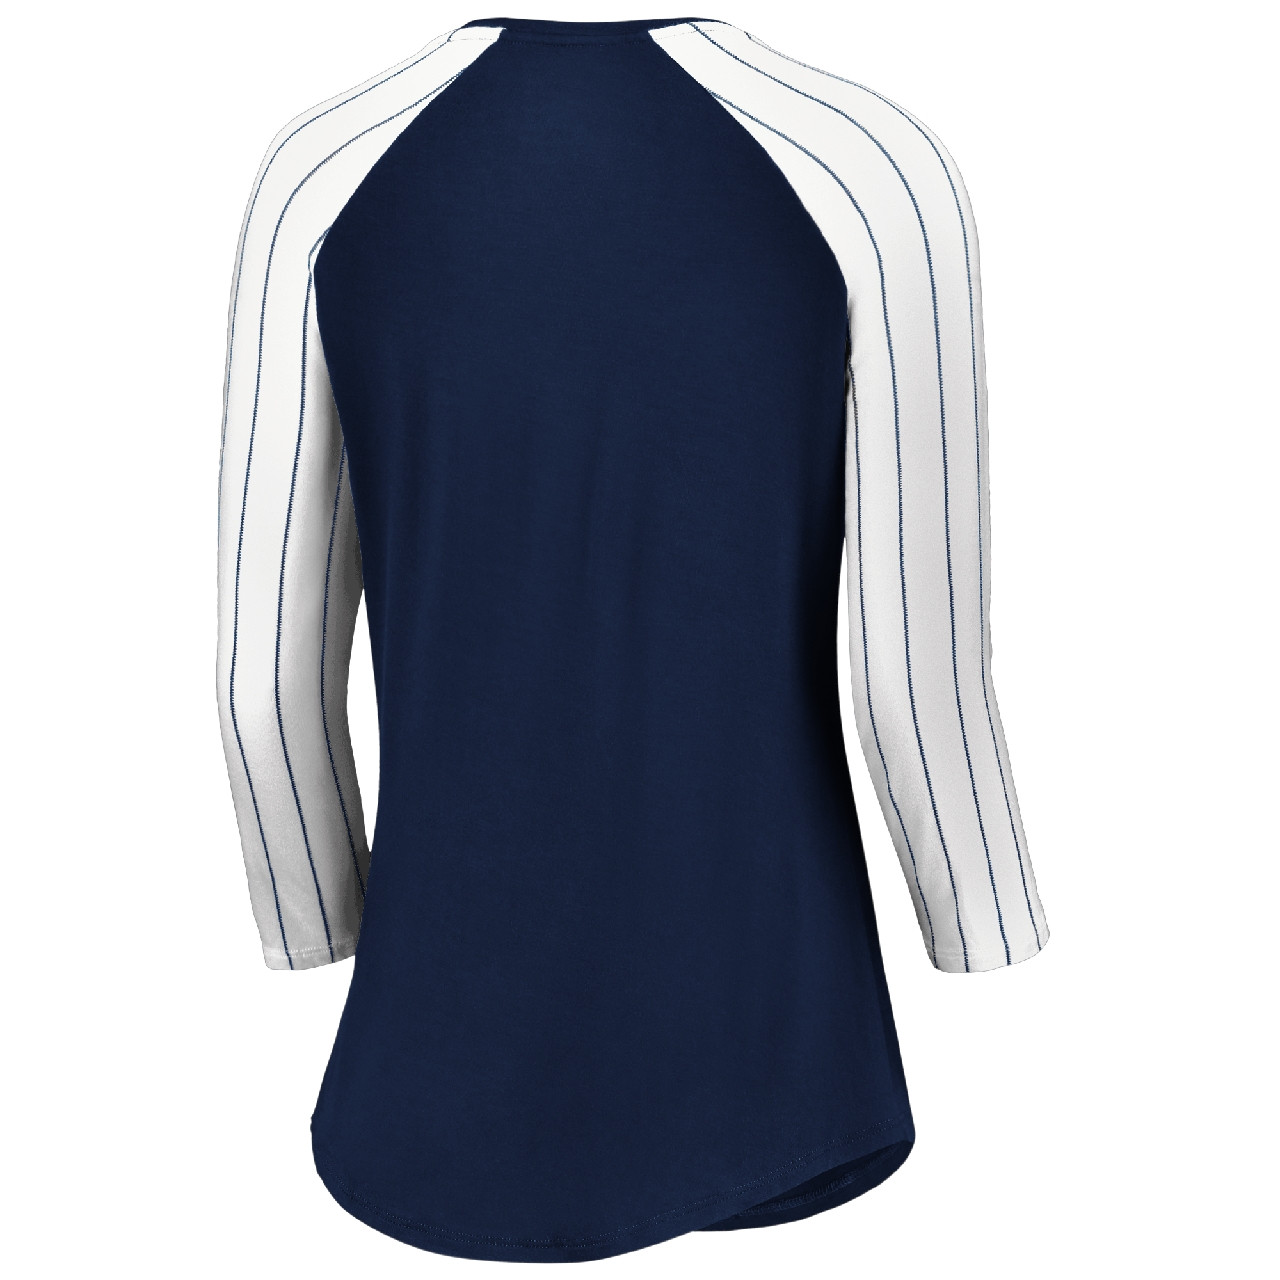 New York Yankees Navy Women's Iconic Pinstripe 3/4 Sleeve Shirt by Fanatics